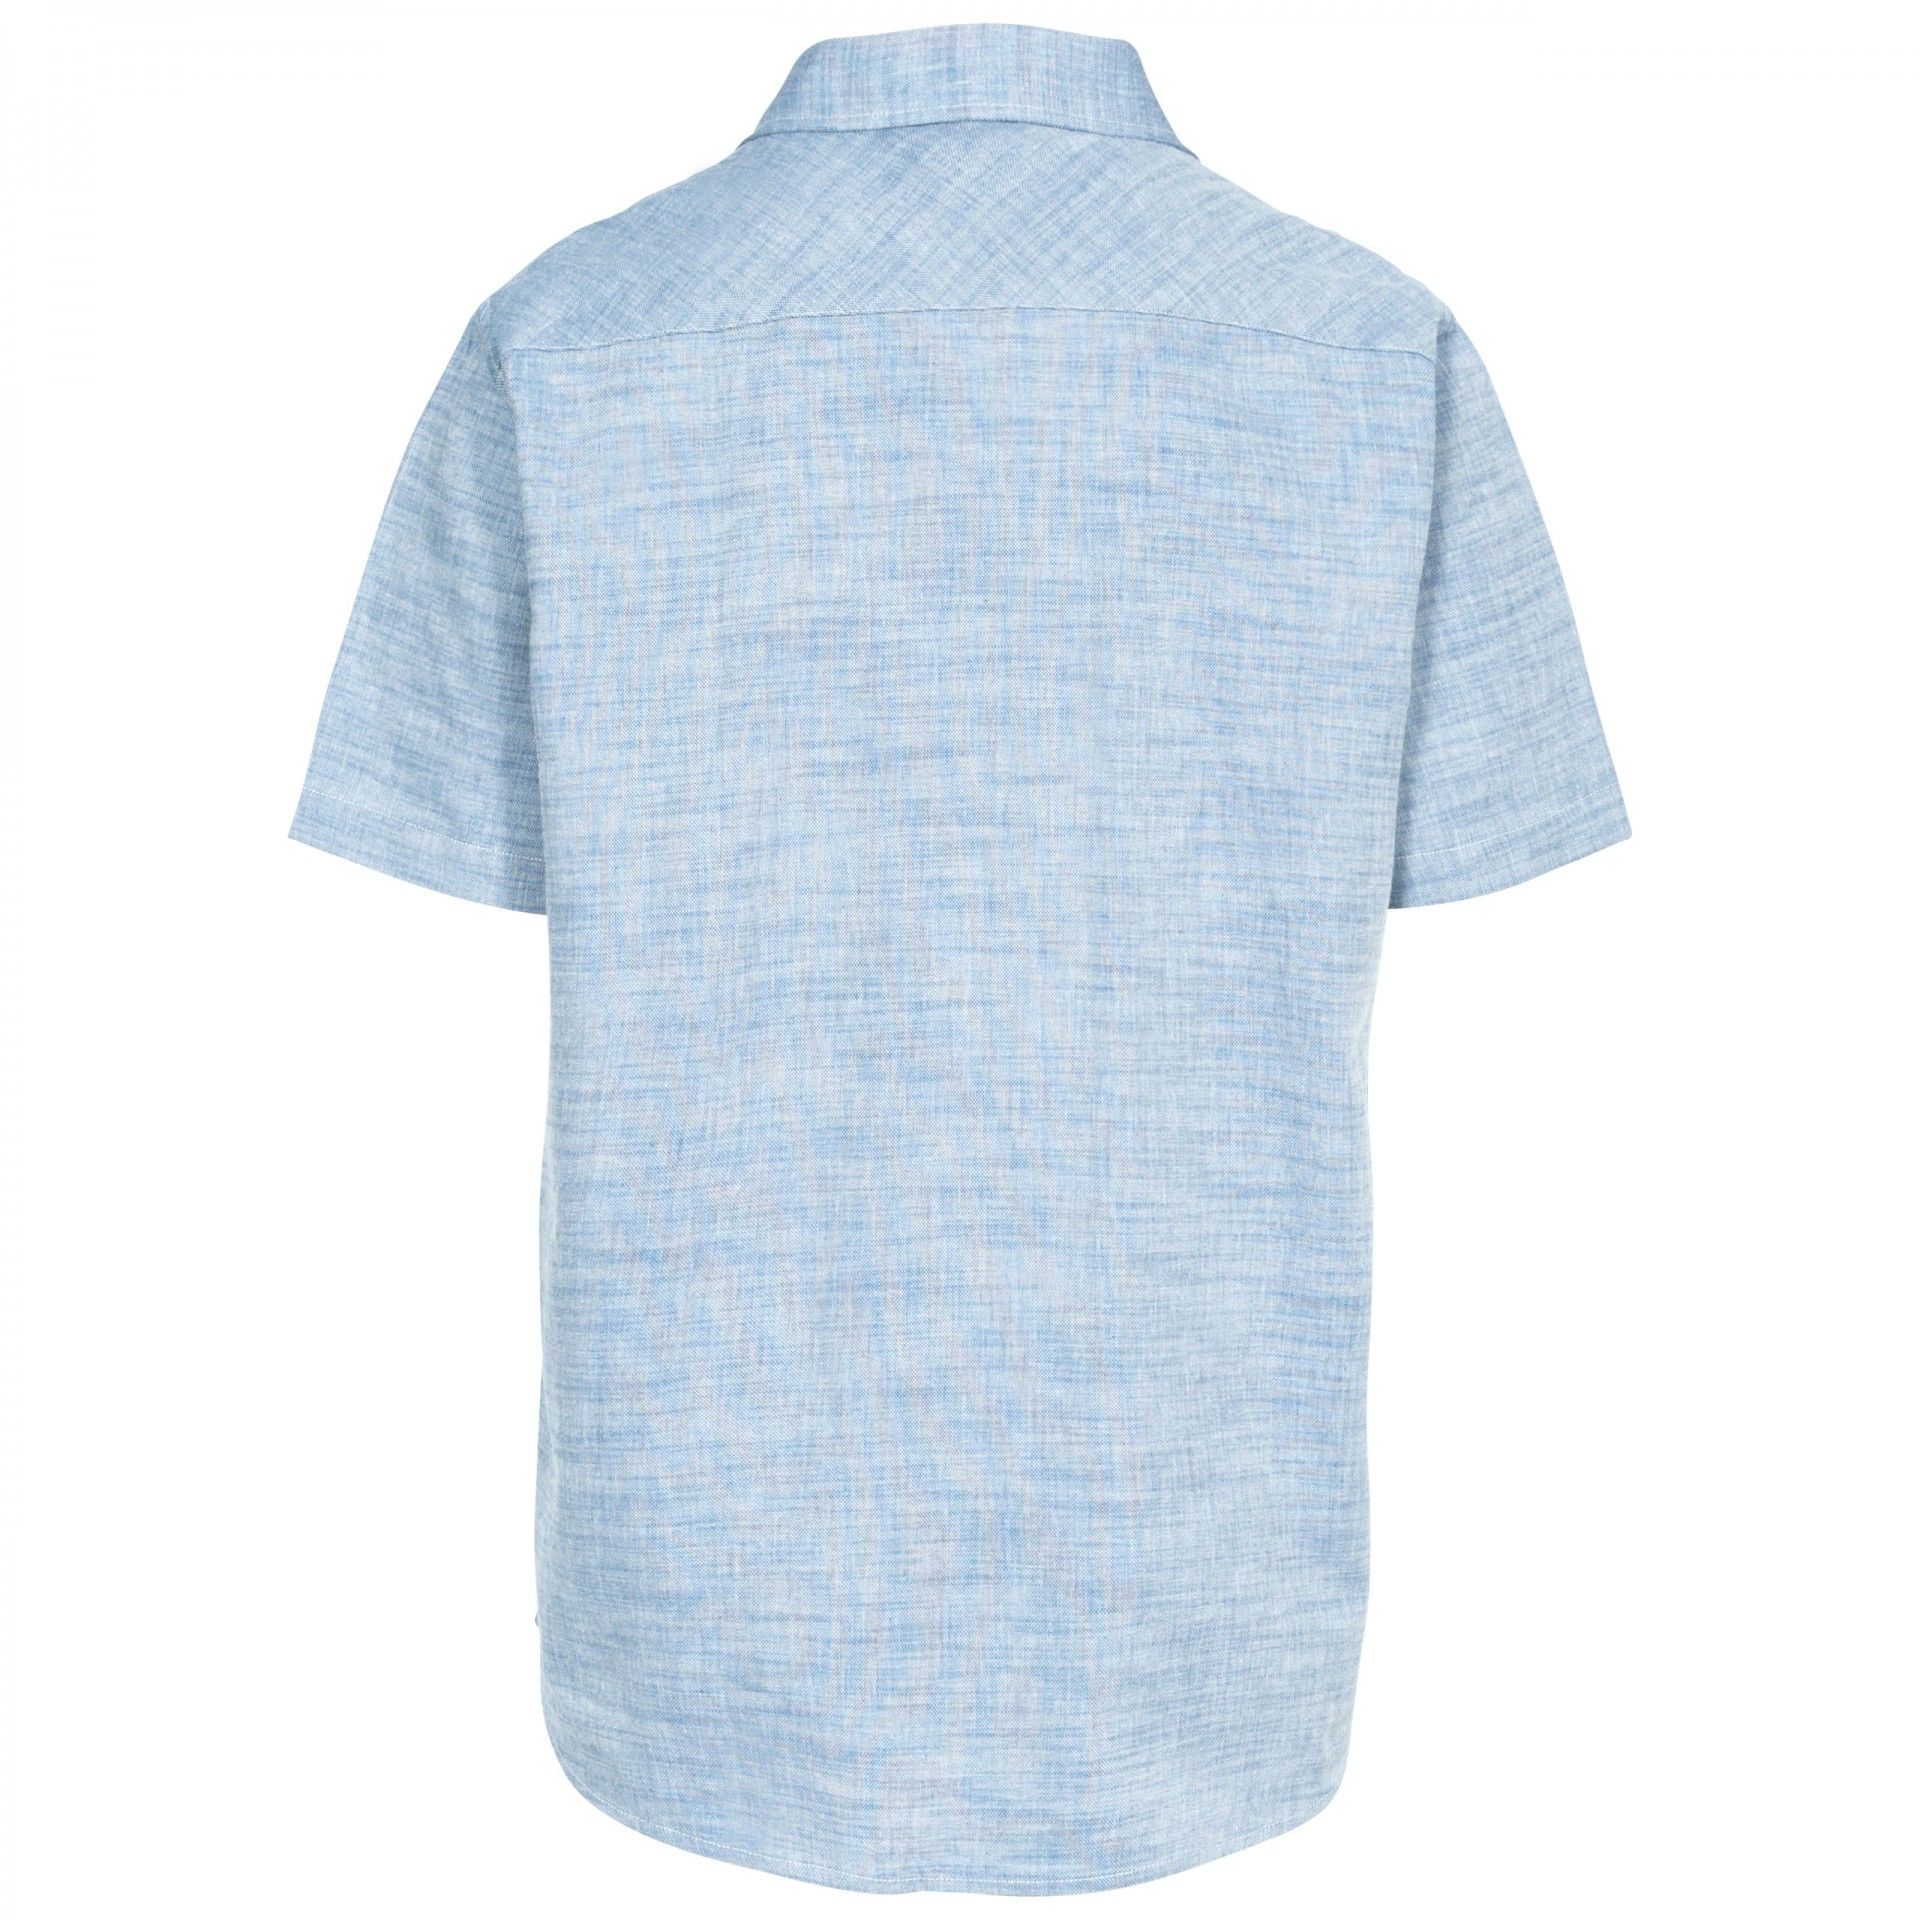 2 piece collar casual short sleeve shirt. Chest pocket. Button fastening. 100% woven cotton slub.